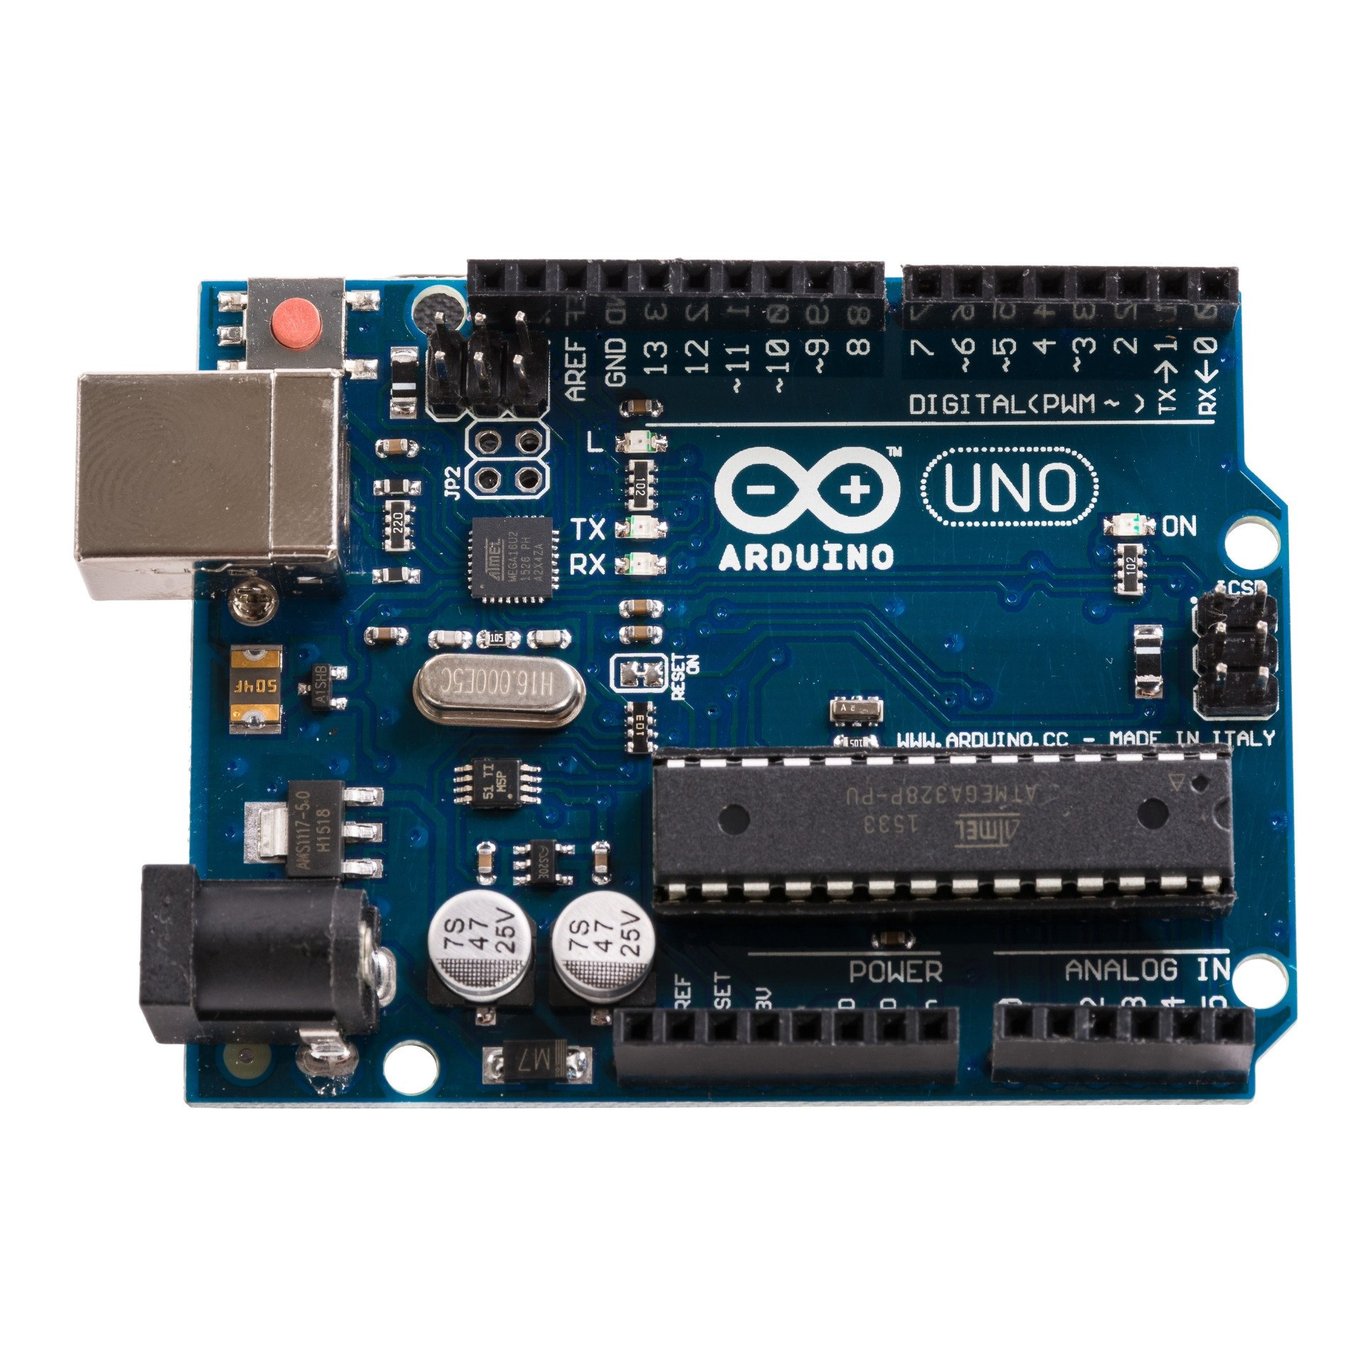 https://www.firgelliauto.com.au/products/arduino-uno-r3-microcontroller